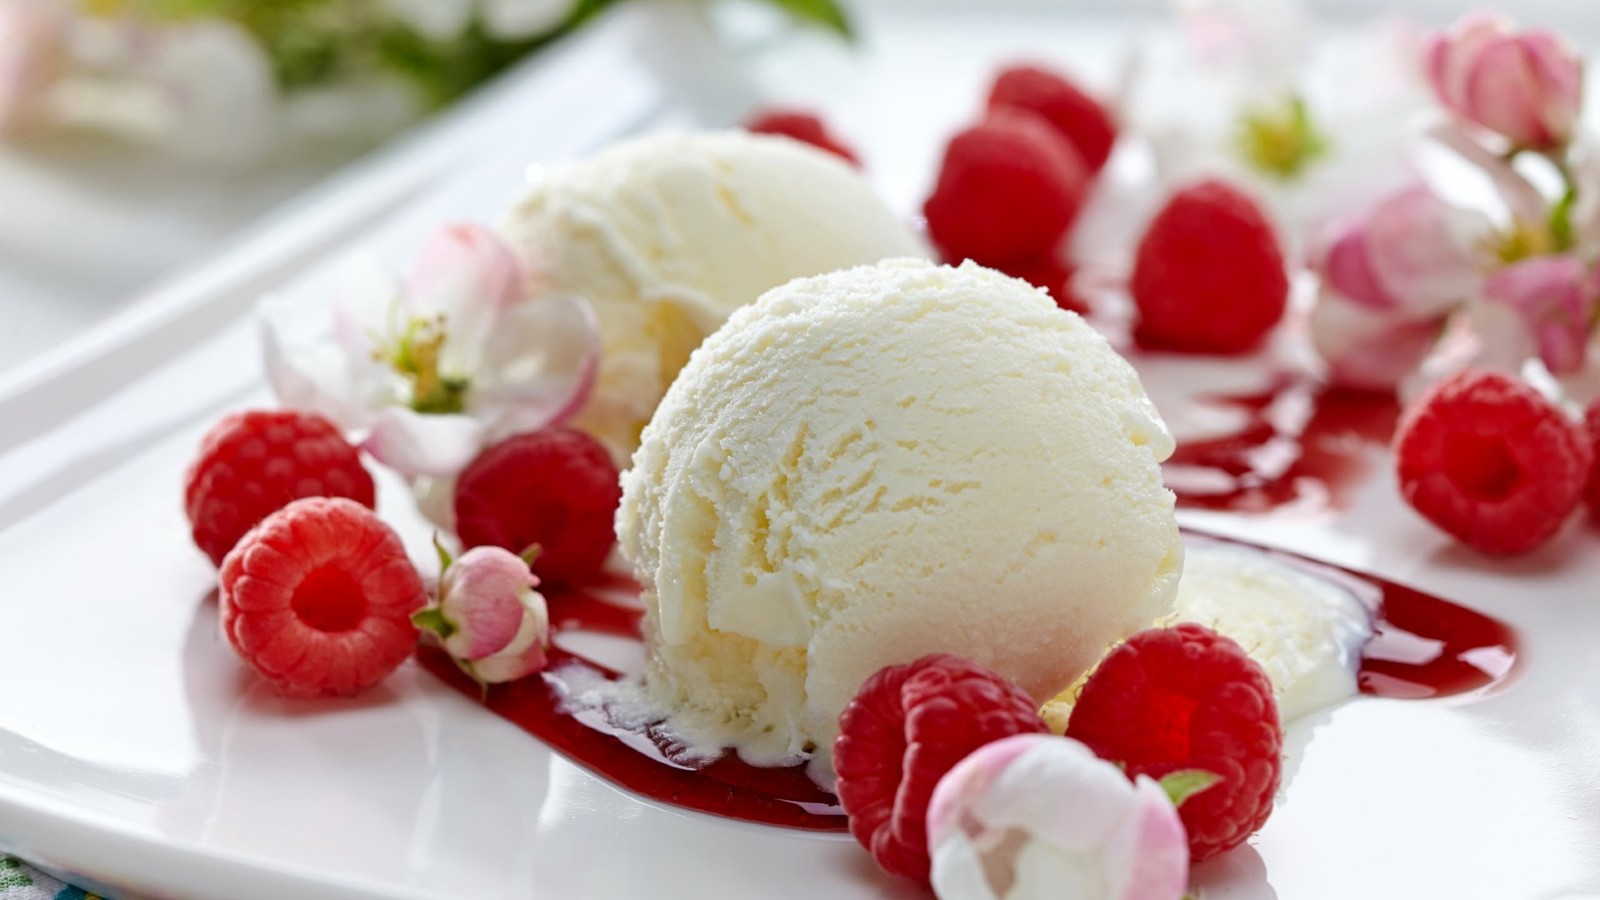 Mixed Berry Ice Cream Wallpaper Baltana